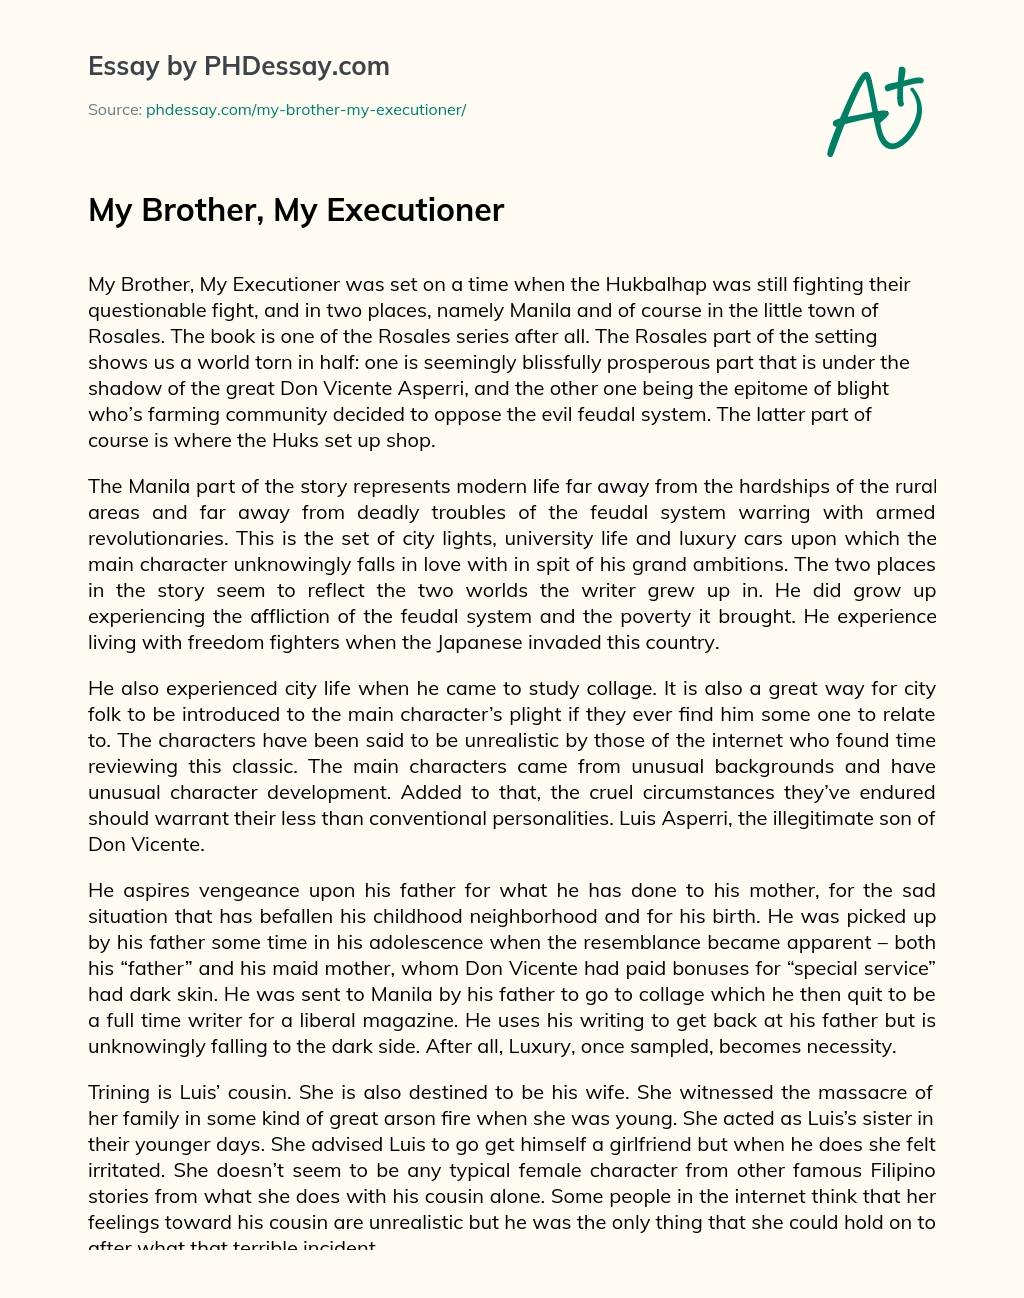 My Brother, My Executioner essay